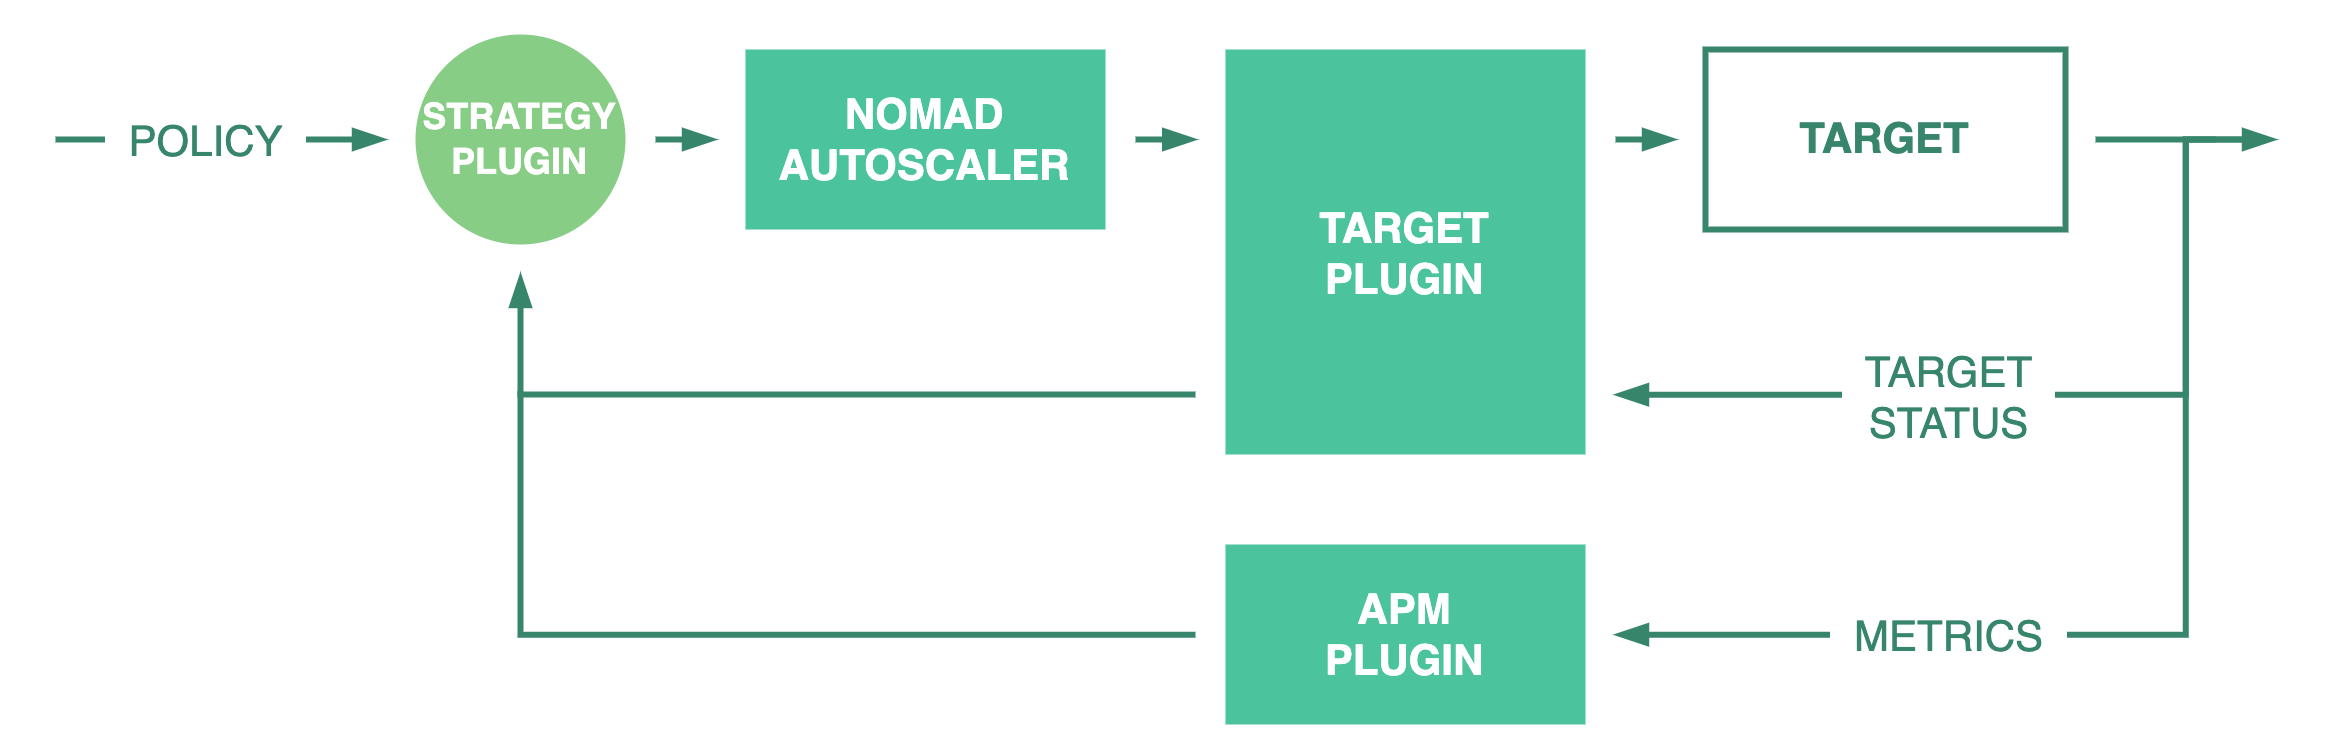 Nomad Autoscaler architecture